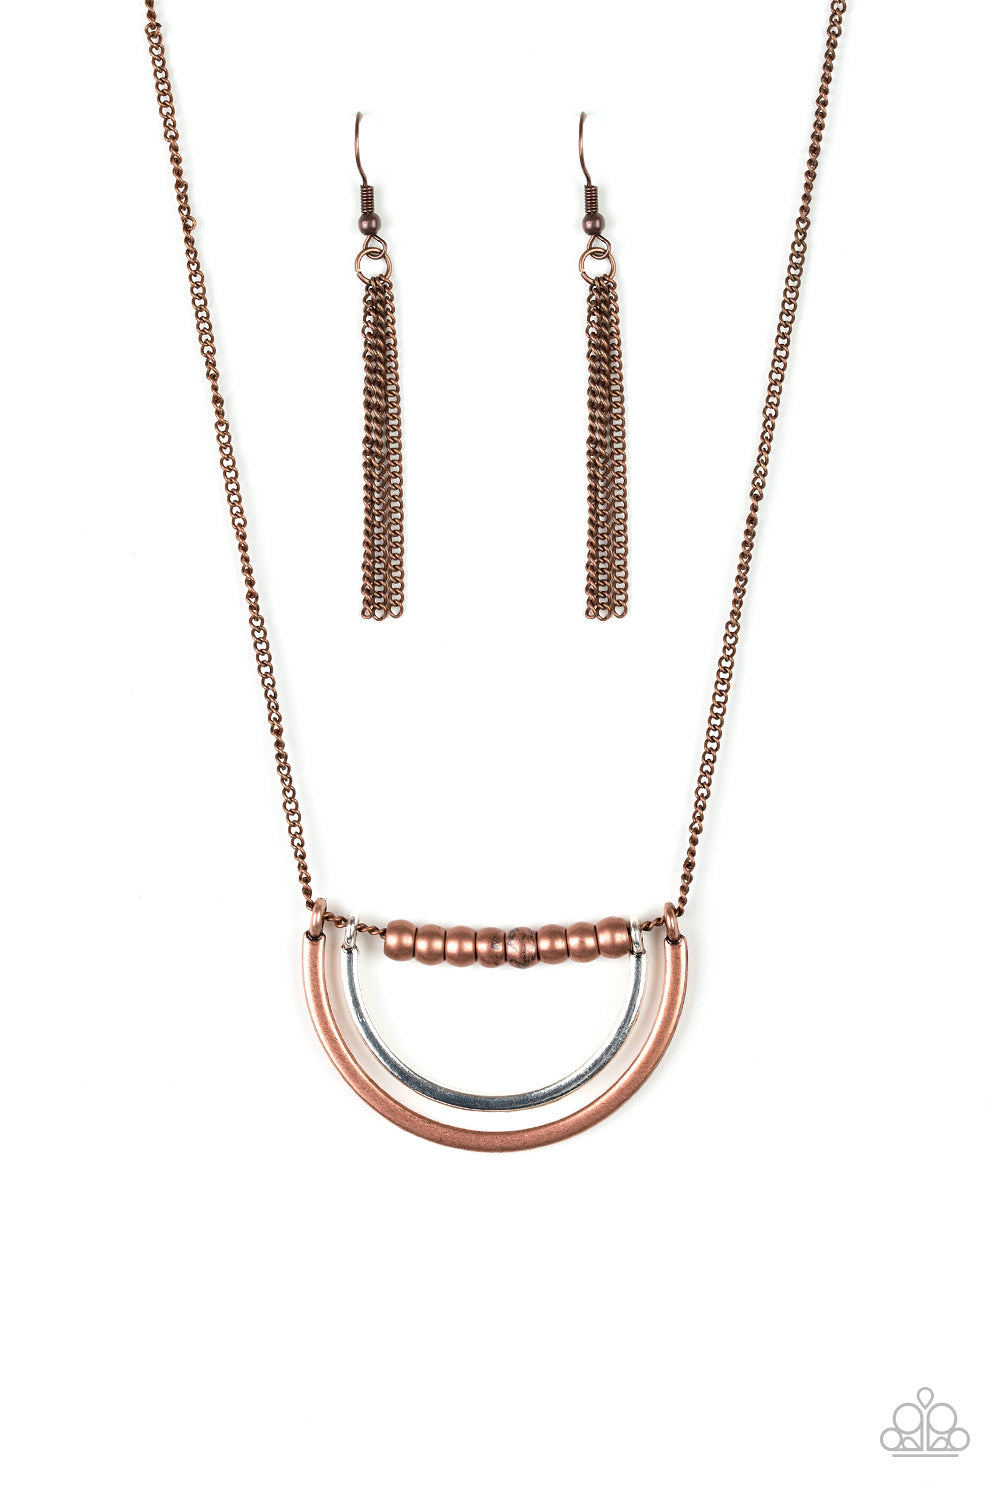 Artificial Arches Necklace - Copper